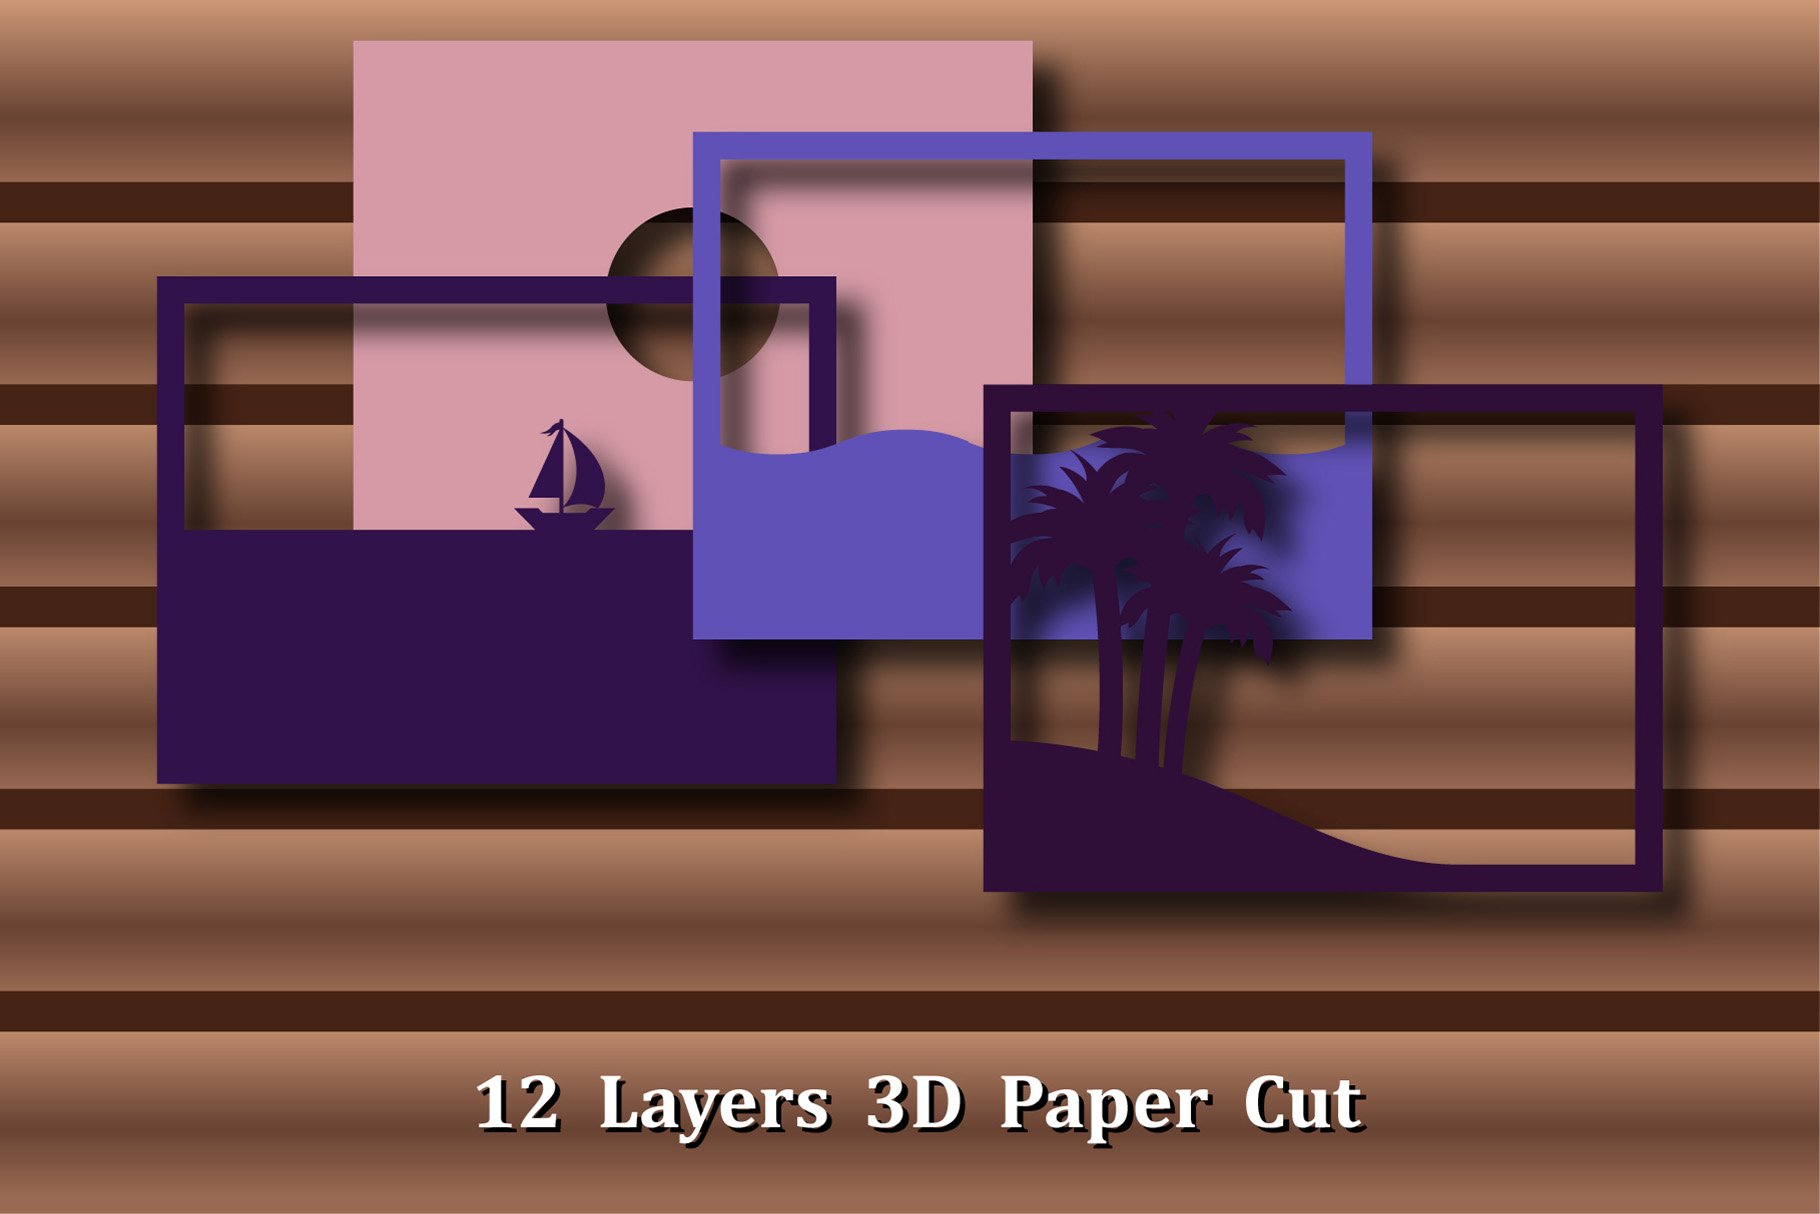 Sunset Sea 3D Paper Cut Panel preview image.